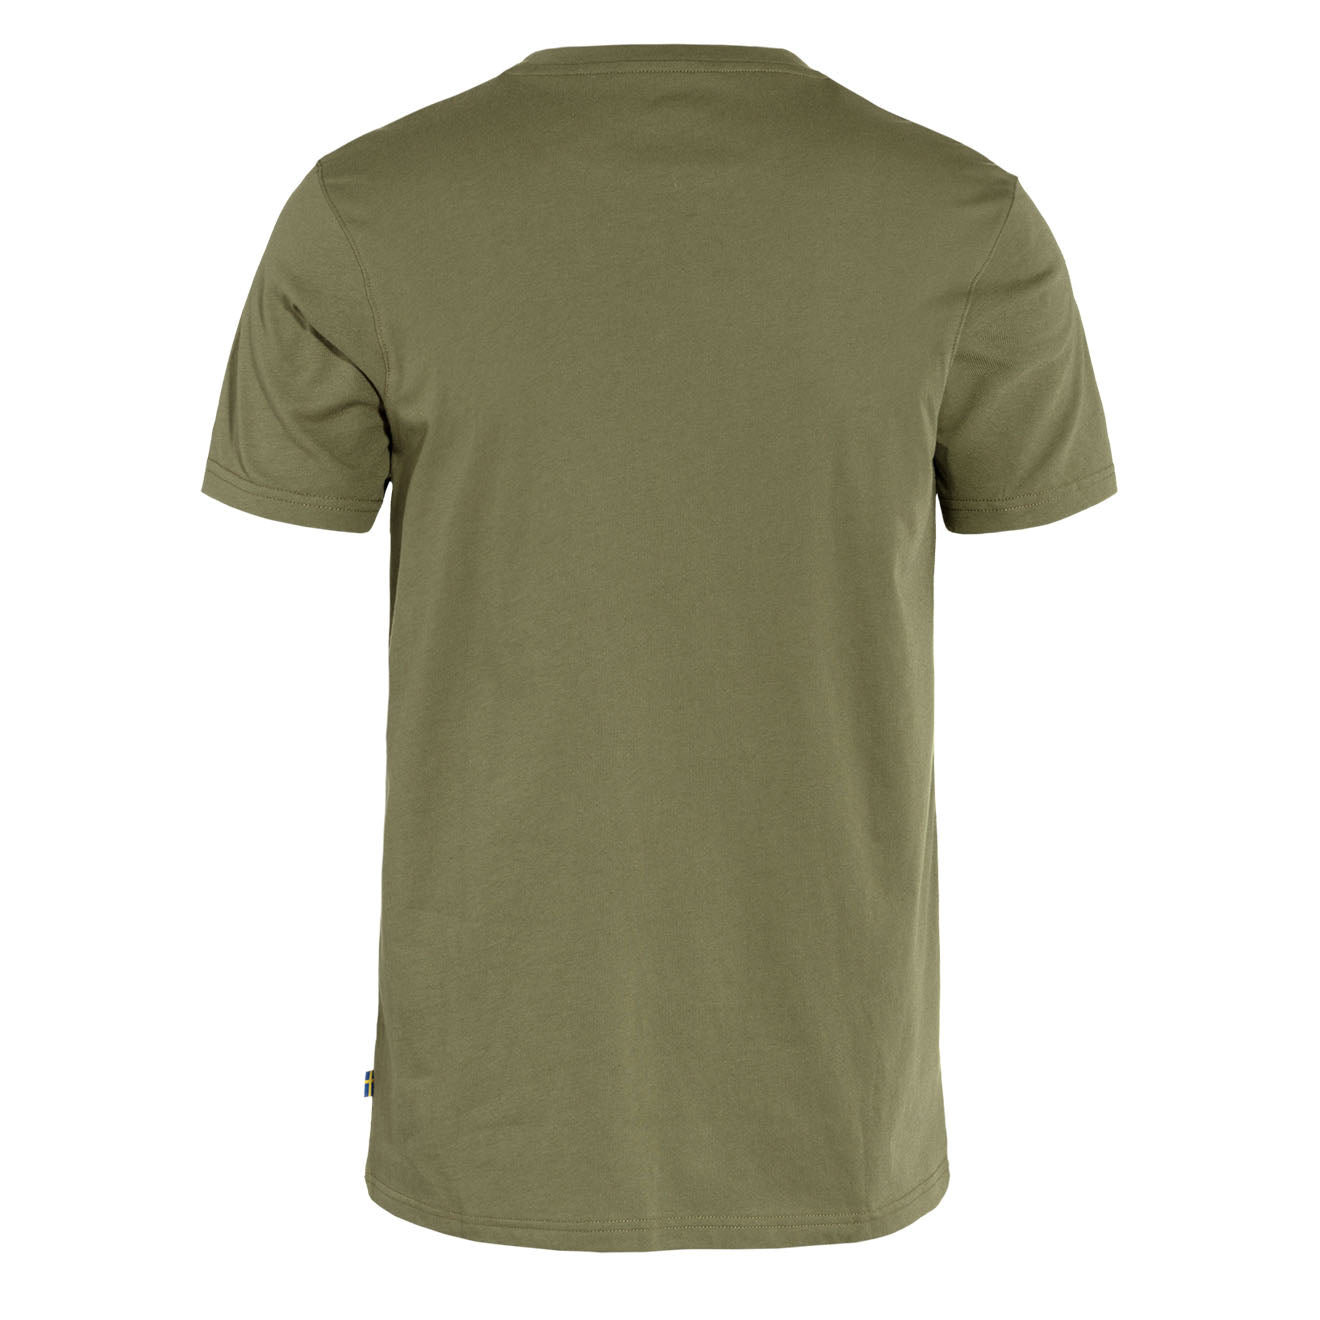 Fjallraven Fjällräven Equipment S/S T-Shirt Green | The Sporting Lodge